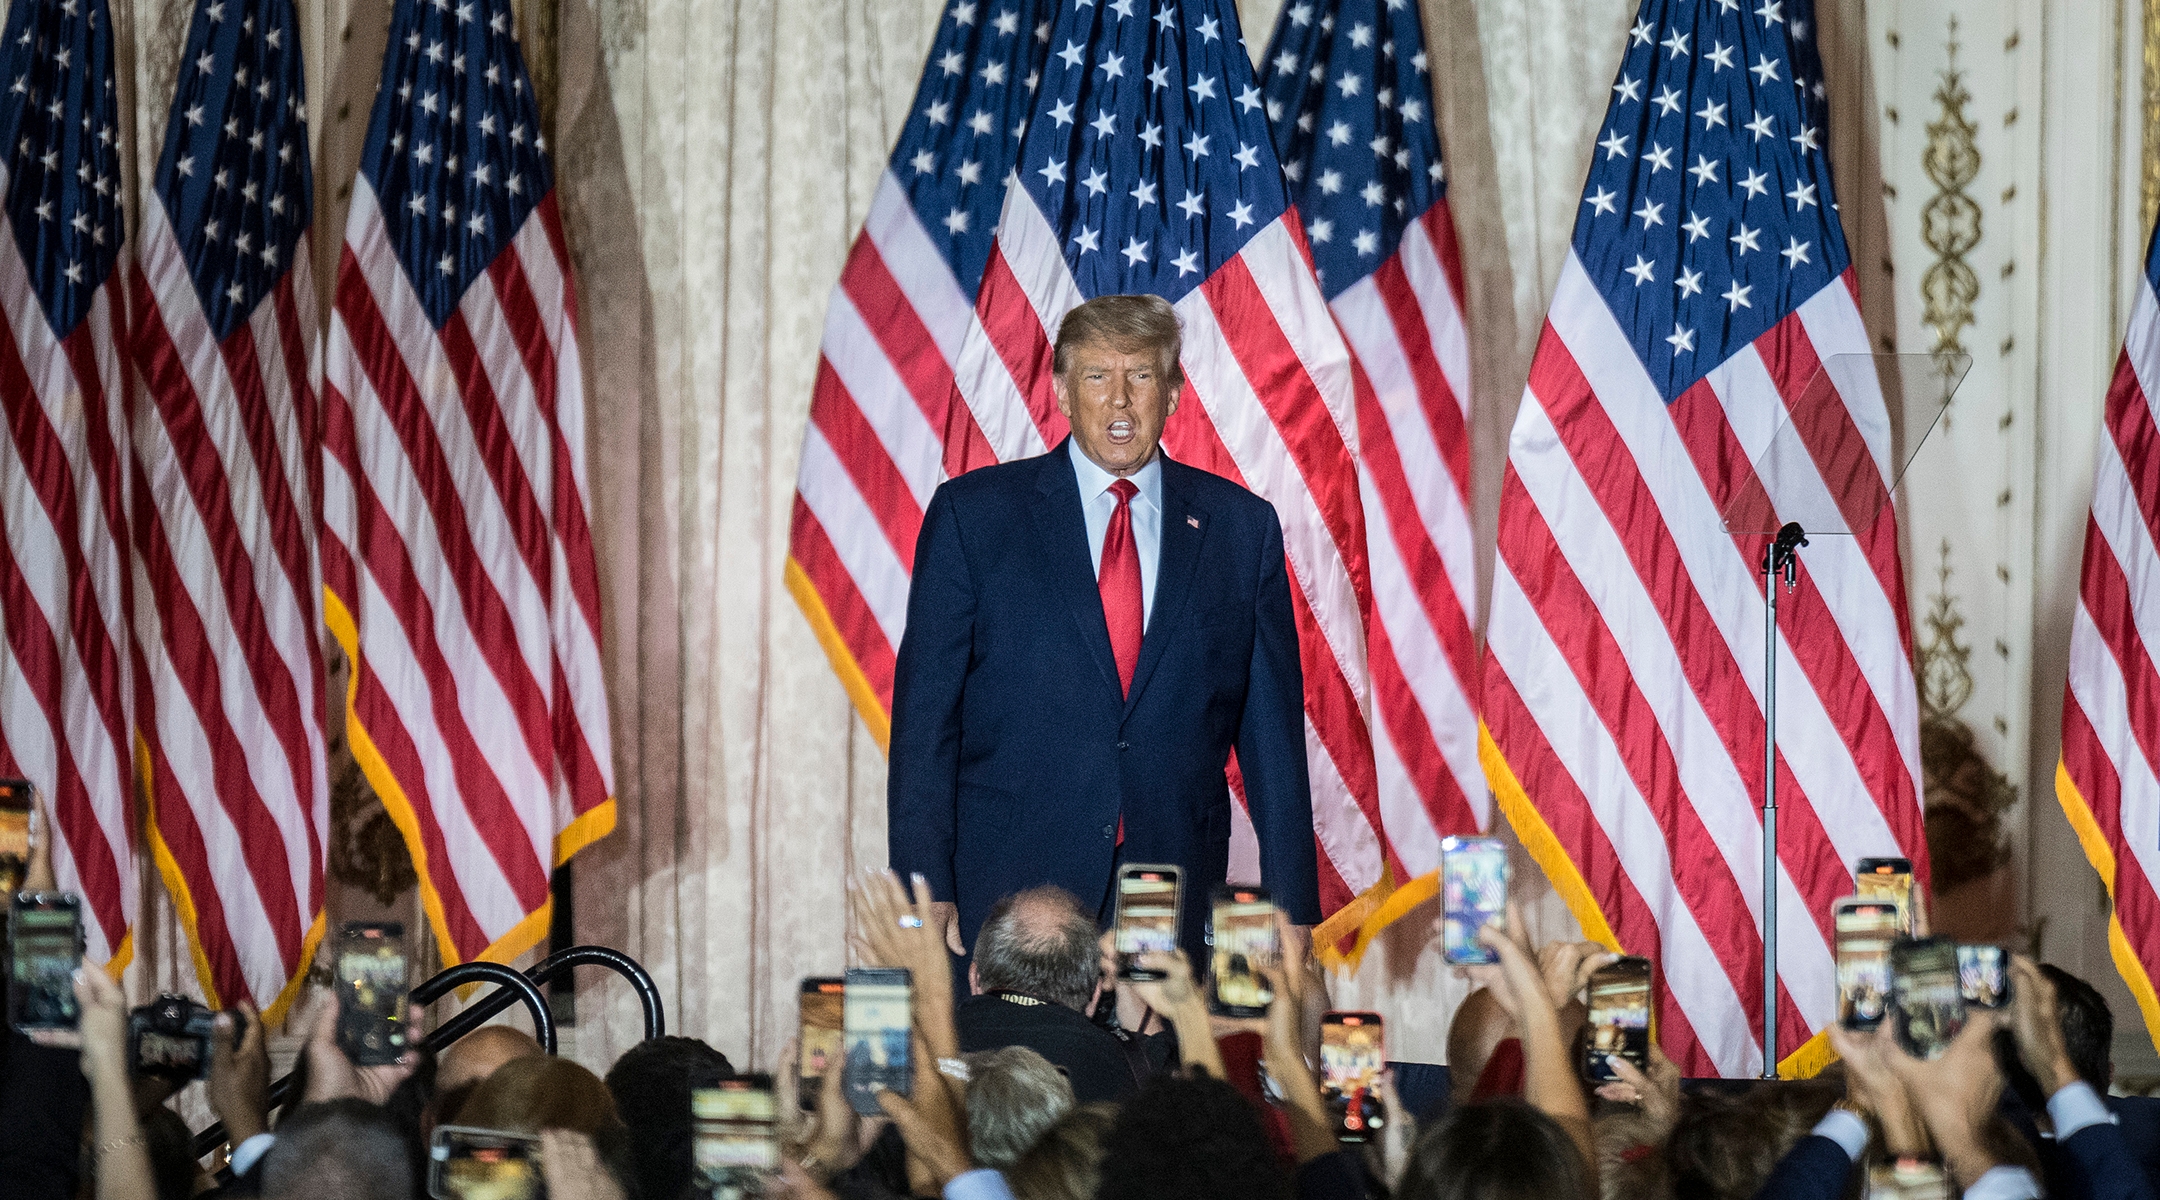 Donald Trump announces his bid for the presidency at Mar-a-Lago in Palm Beach, Fla., Nov. 15, 2022. (Thomas Simonetti for The Washington Post via Getty Images)